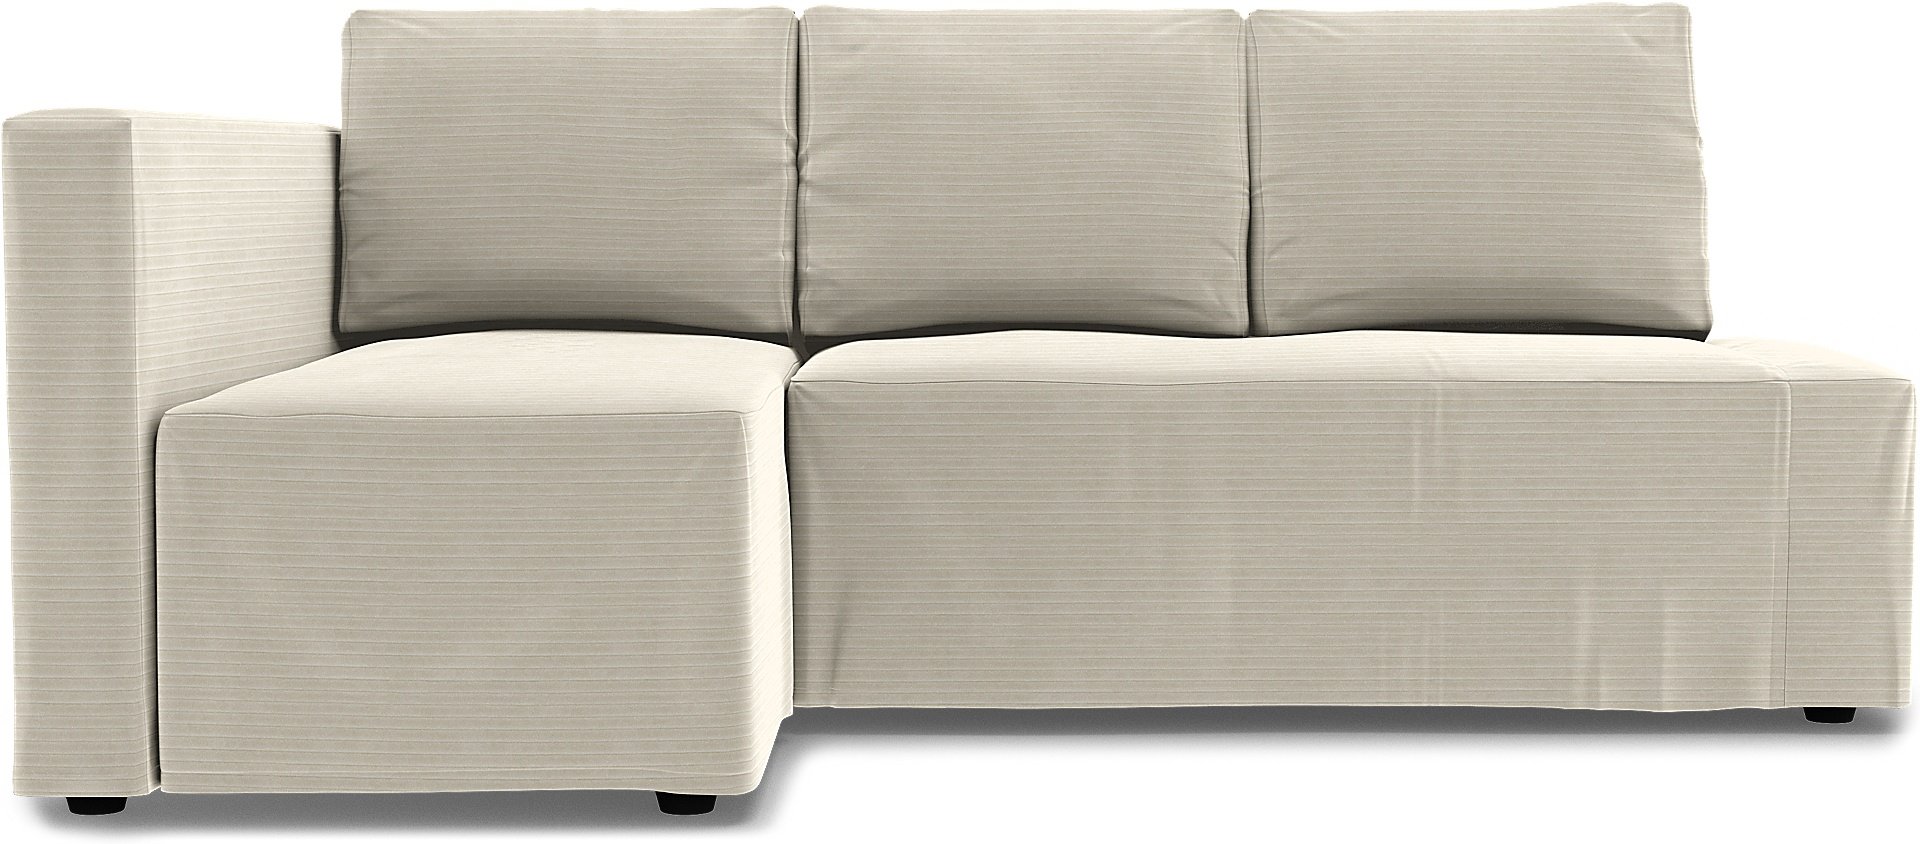 IKEA - Friheten Sofa Bed with Left Chaise Cover, Tofu, Corduroy - Bemz